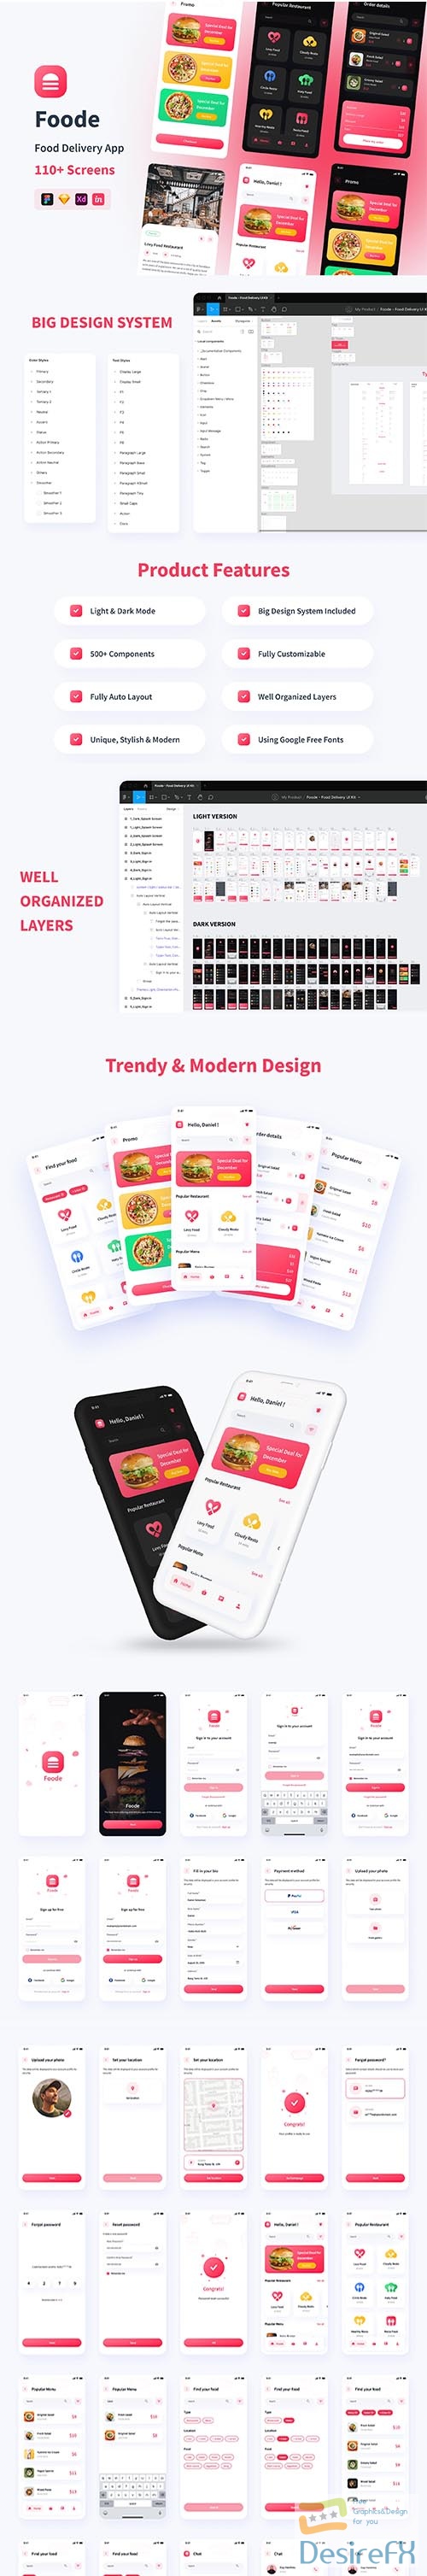 Foode - Food Delivery Mobile App UI Kit UI8